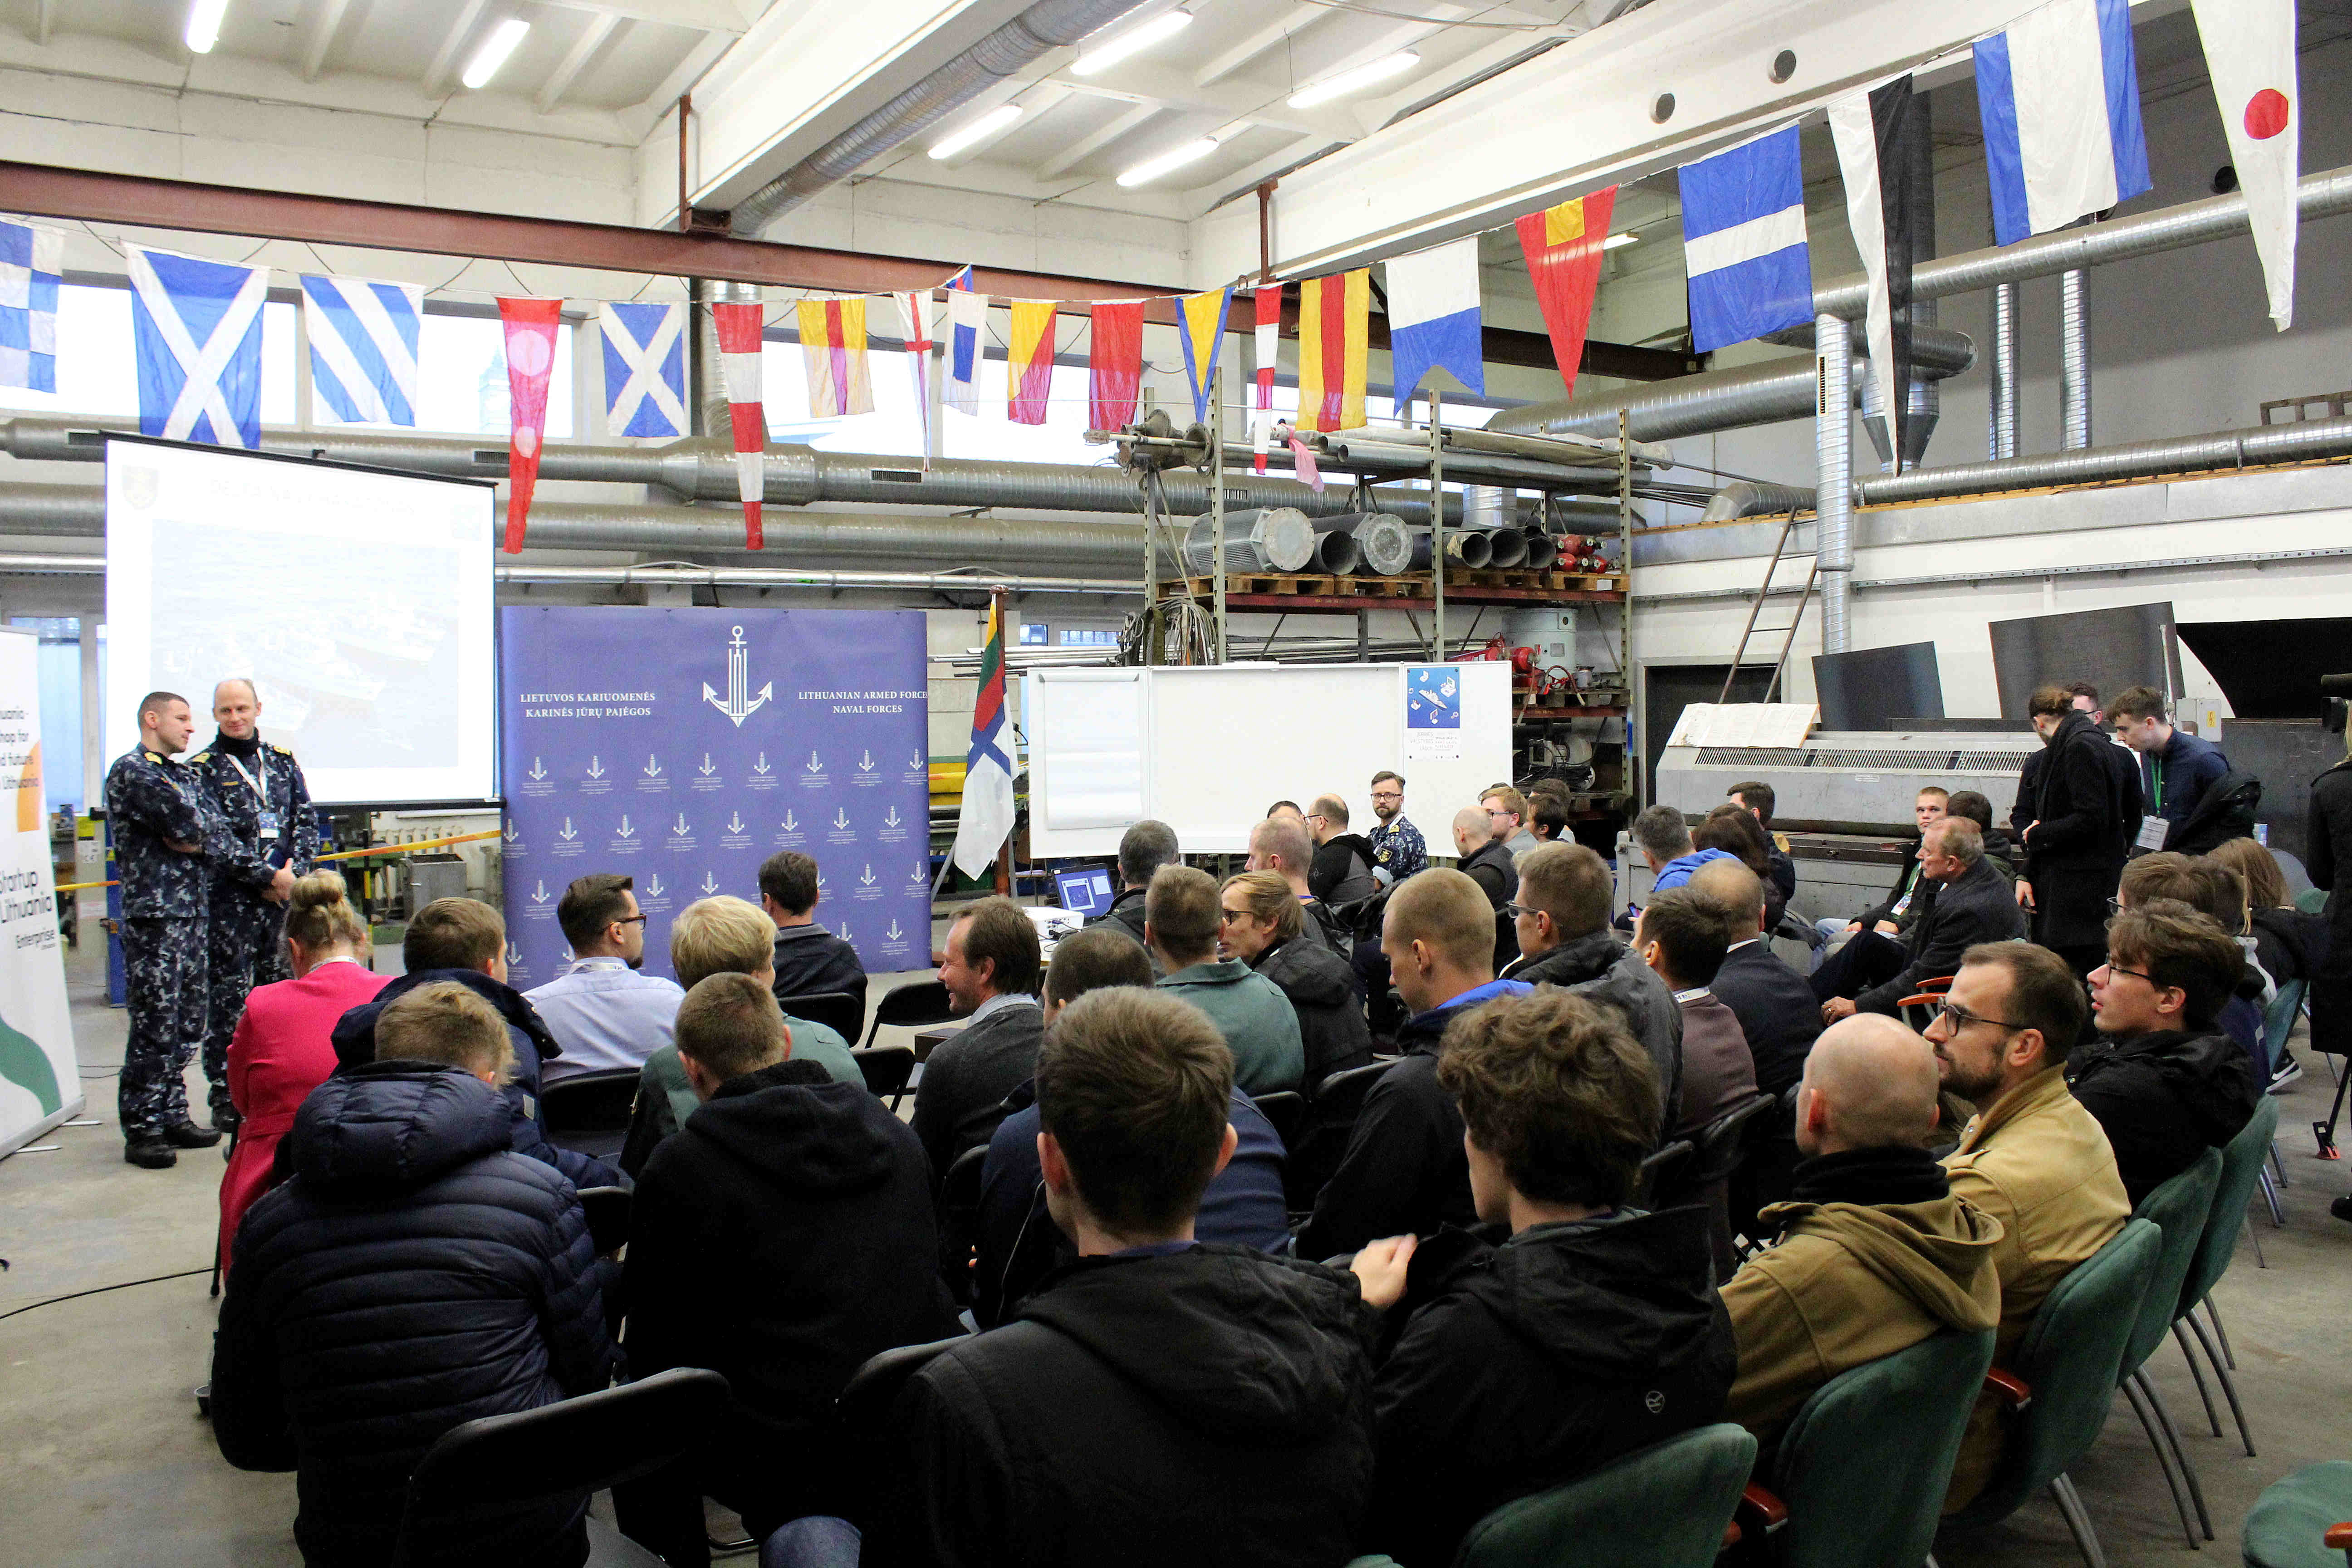 Lithuanian Defence Technology Development Camp, DELTA NAVY Hackathon Results